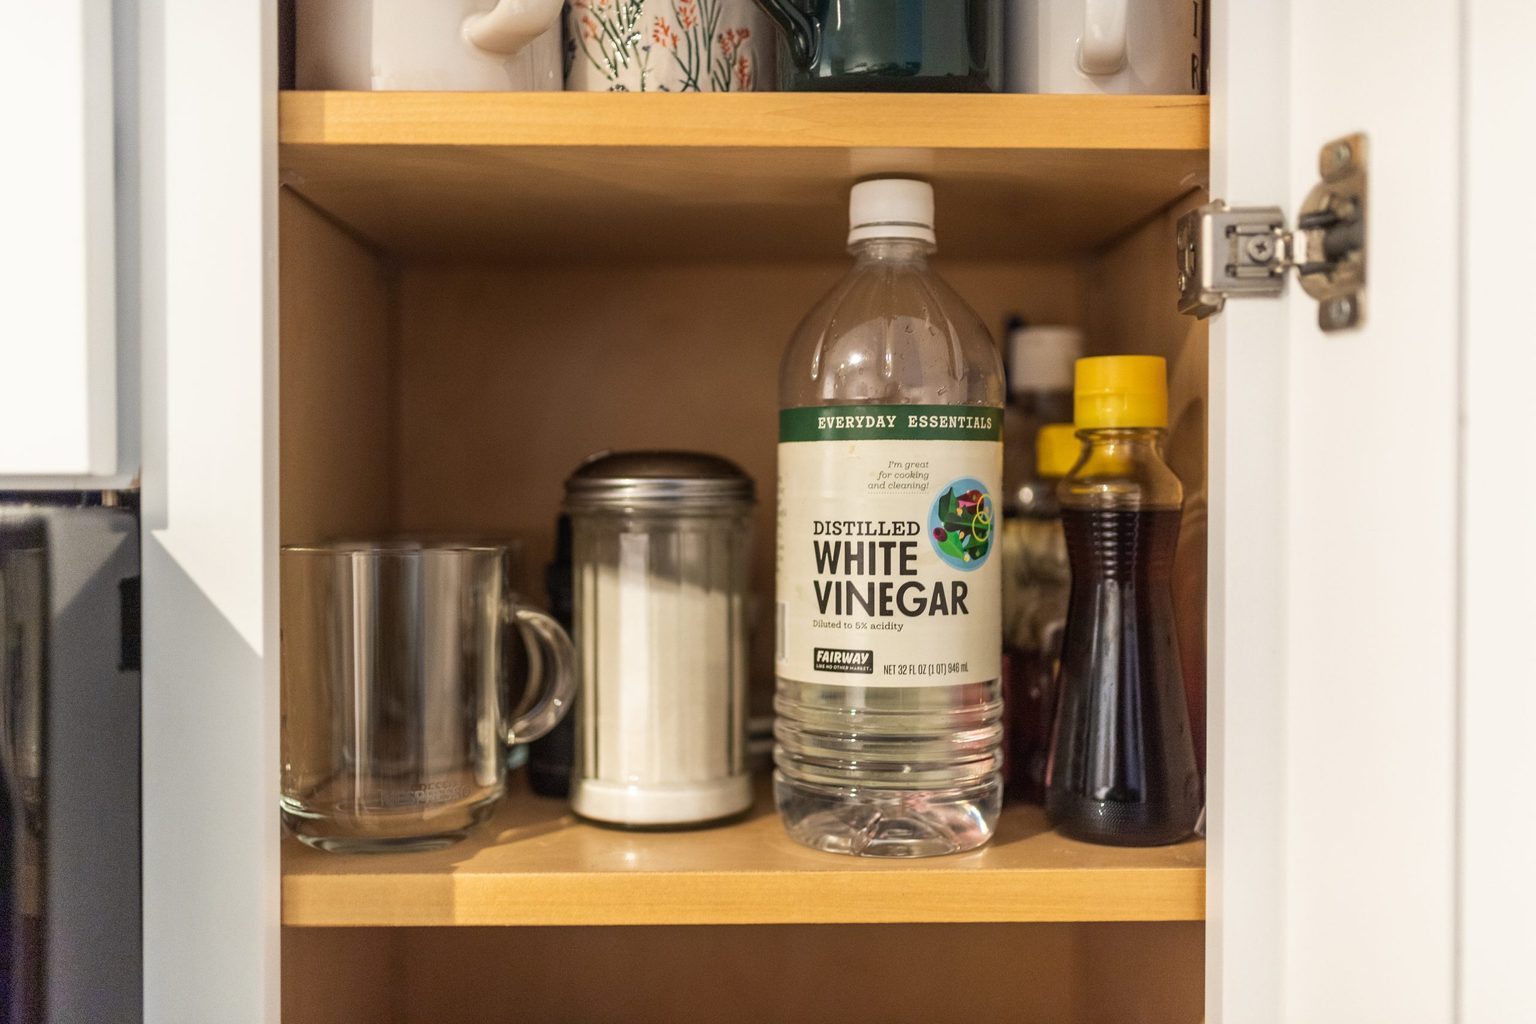 White Vinegar On Shelf In Cabinet